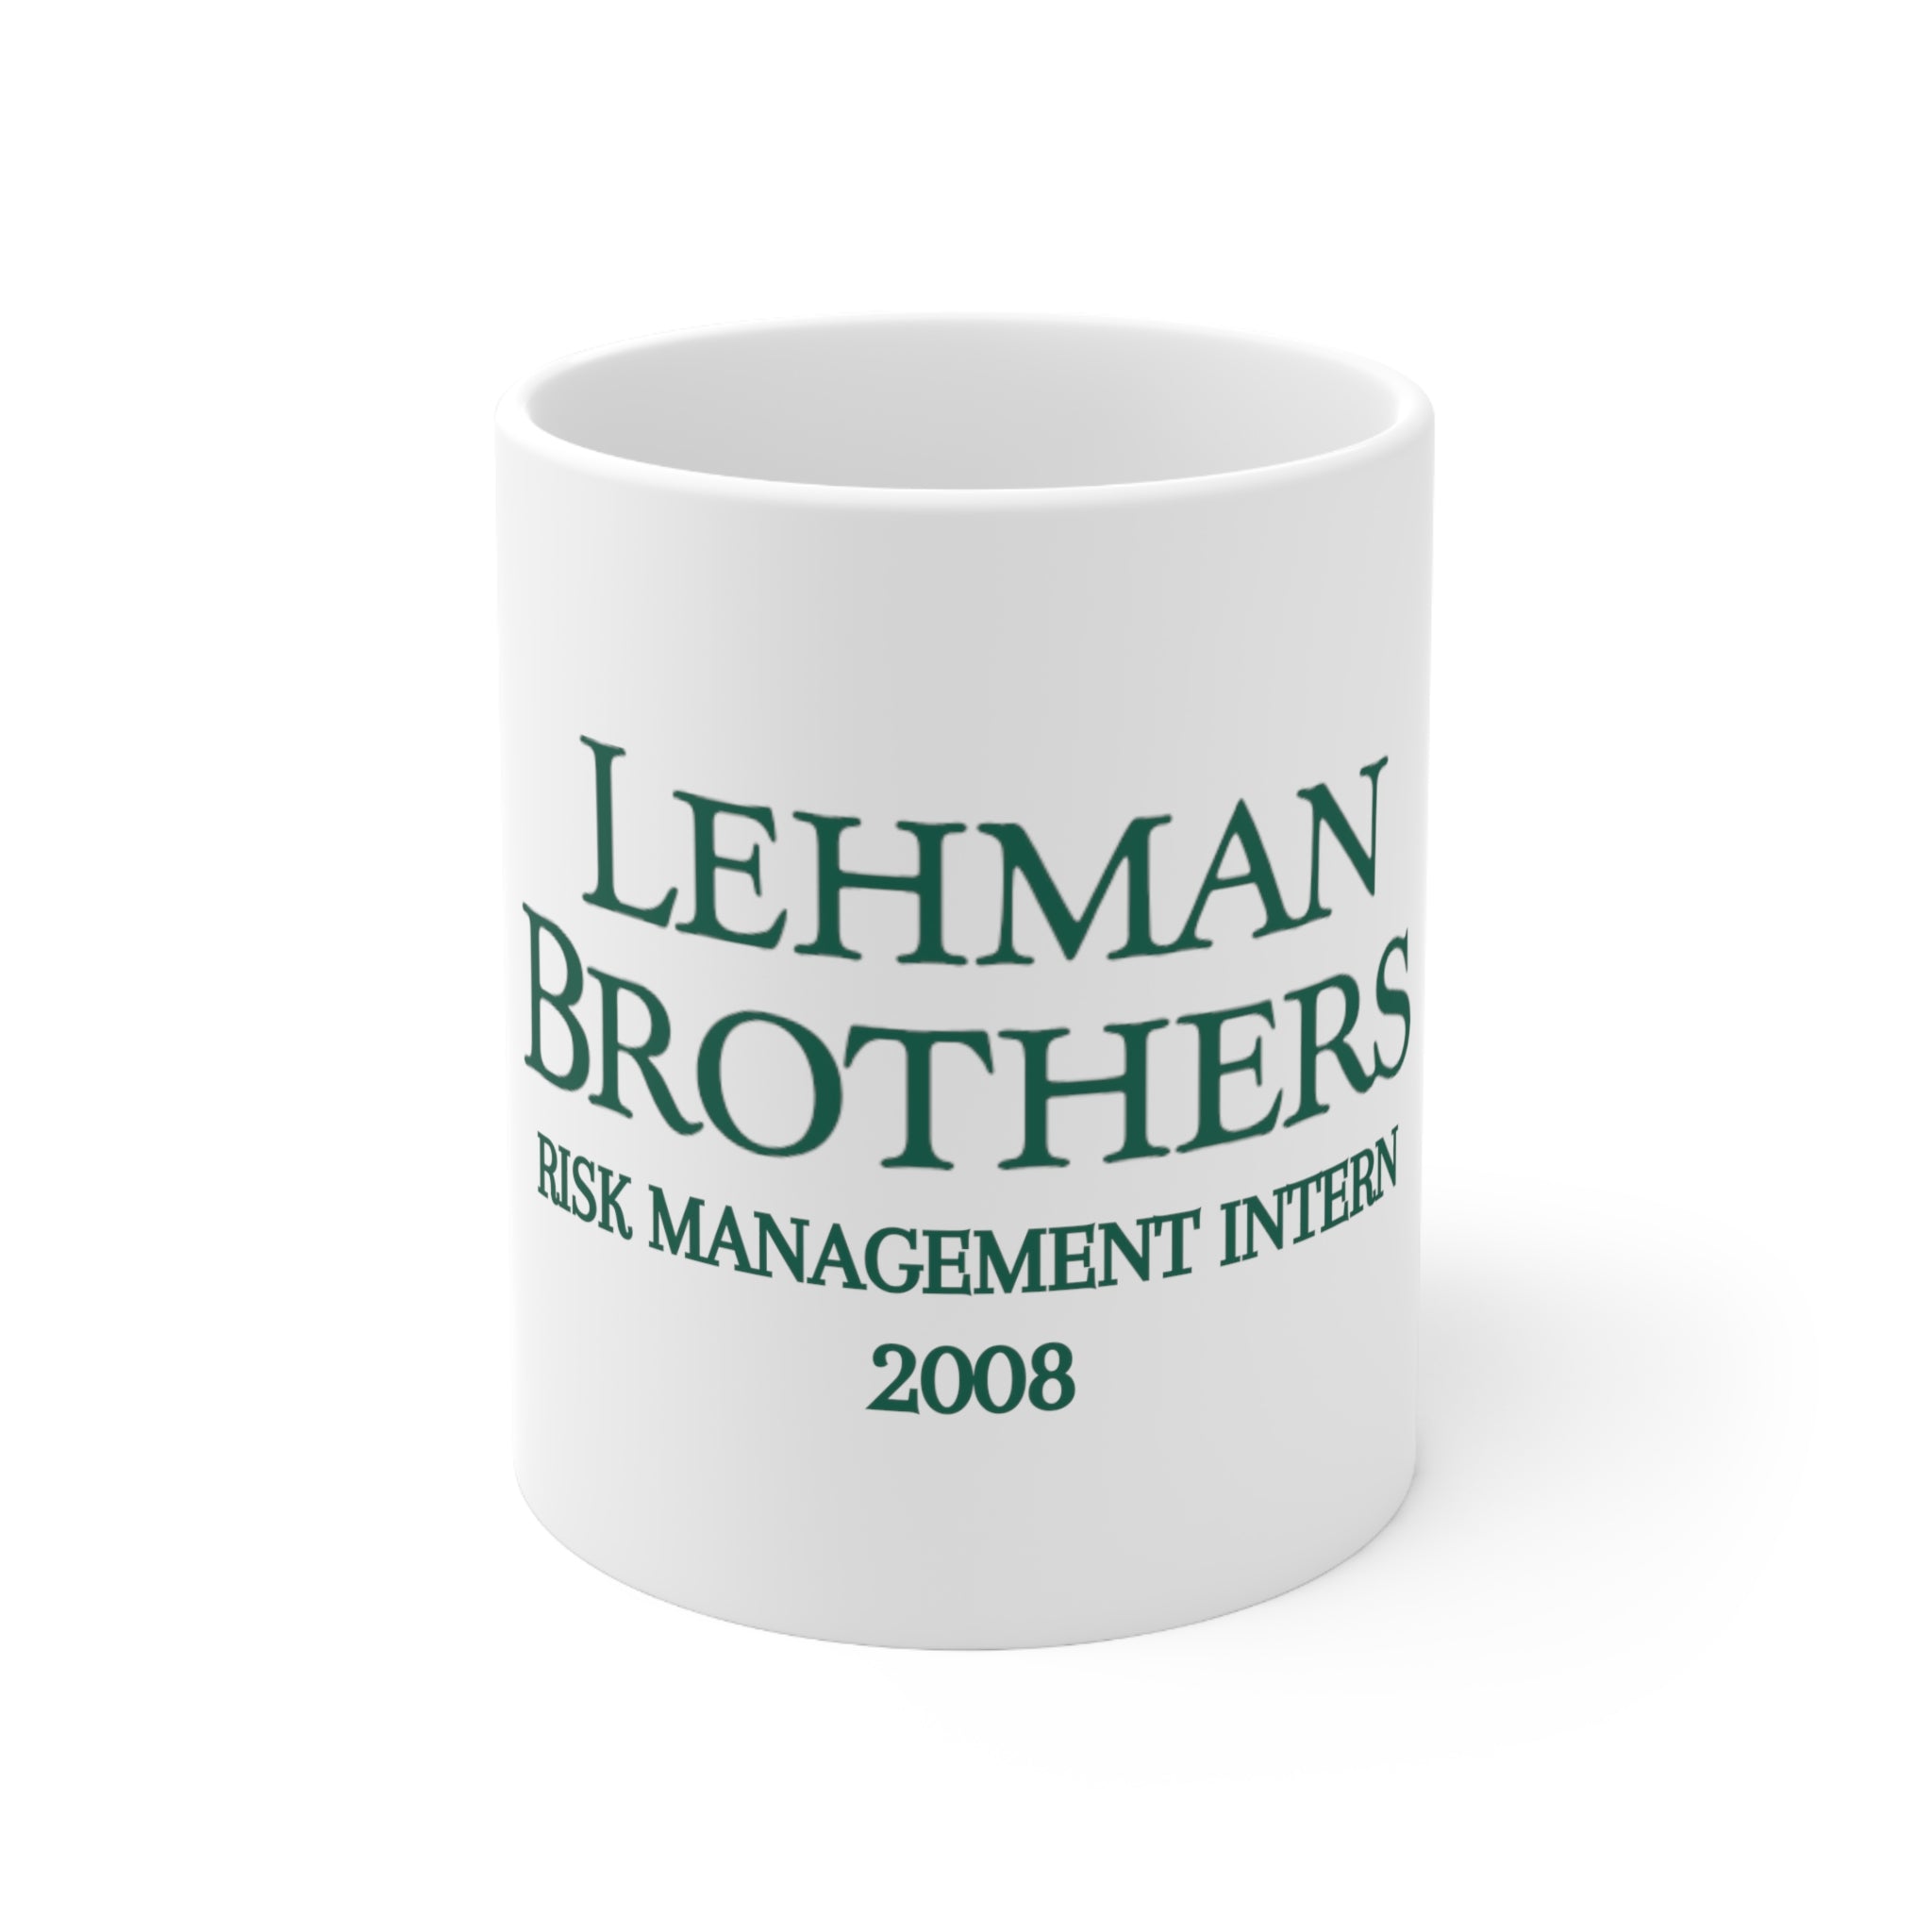 Lehman Brothers Risk Management Intern 2008 - Ceramic Mug 11oz